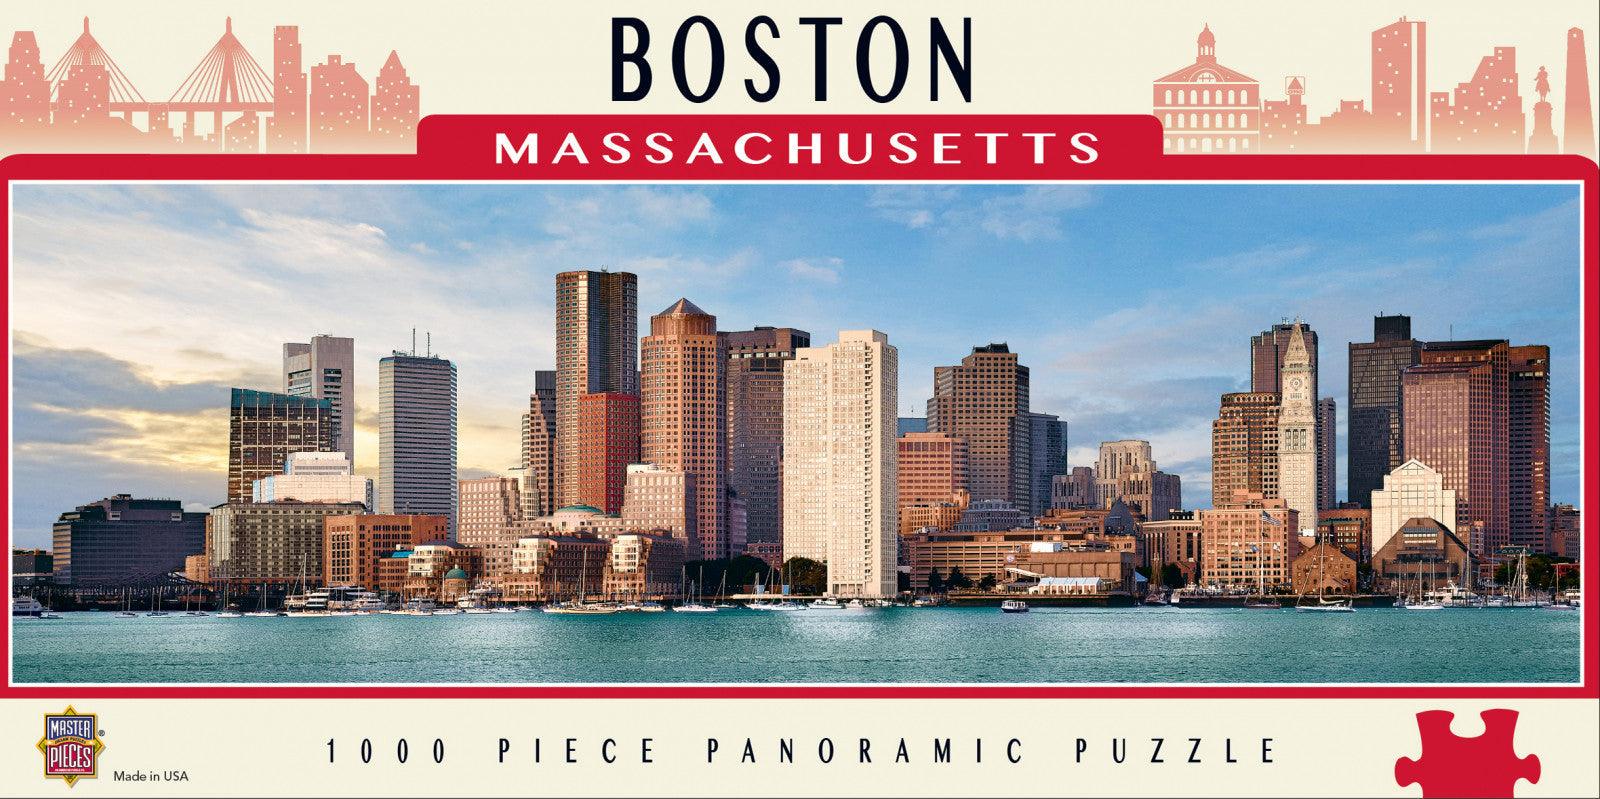 VR-81526 Masterpieces Puzzle City Panoramic Boston Puzzle 1,000 pieces - Masterpieces - Titan Pop Culture